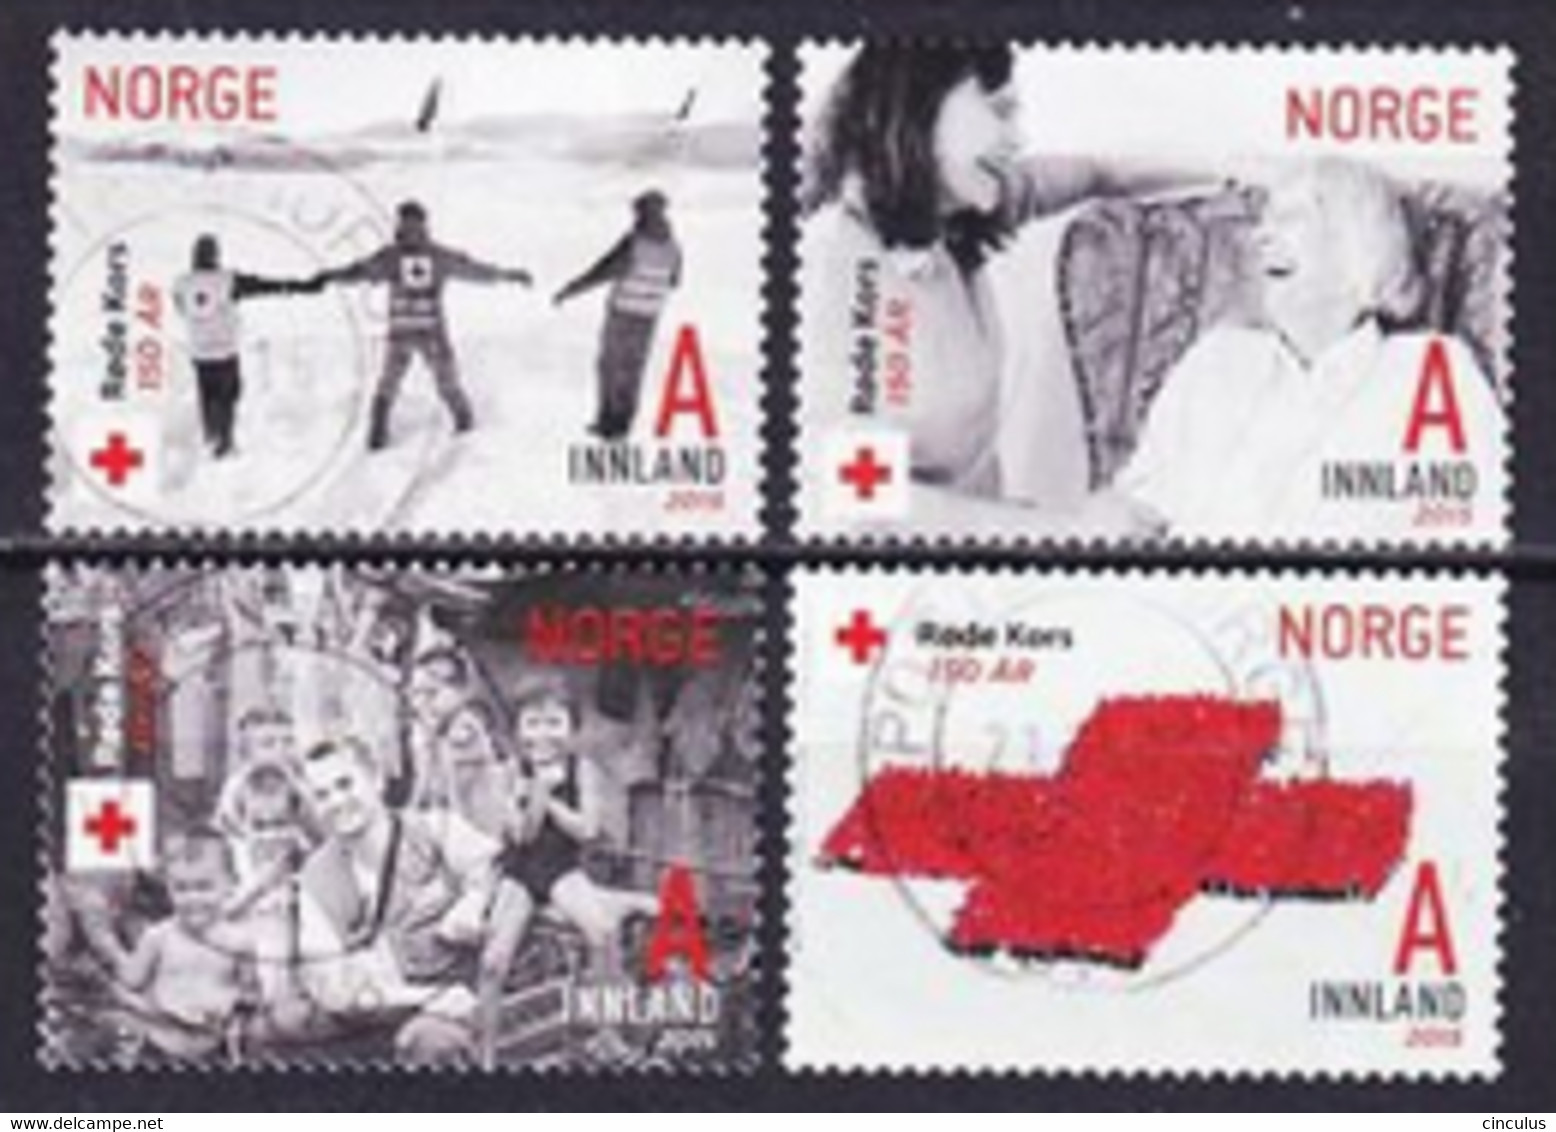 2015. Norway. 150th Anniv Of Red Cross. Used. Mi. Nr. 1874-77 - Oblitérés